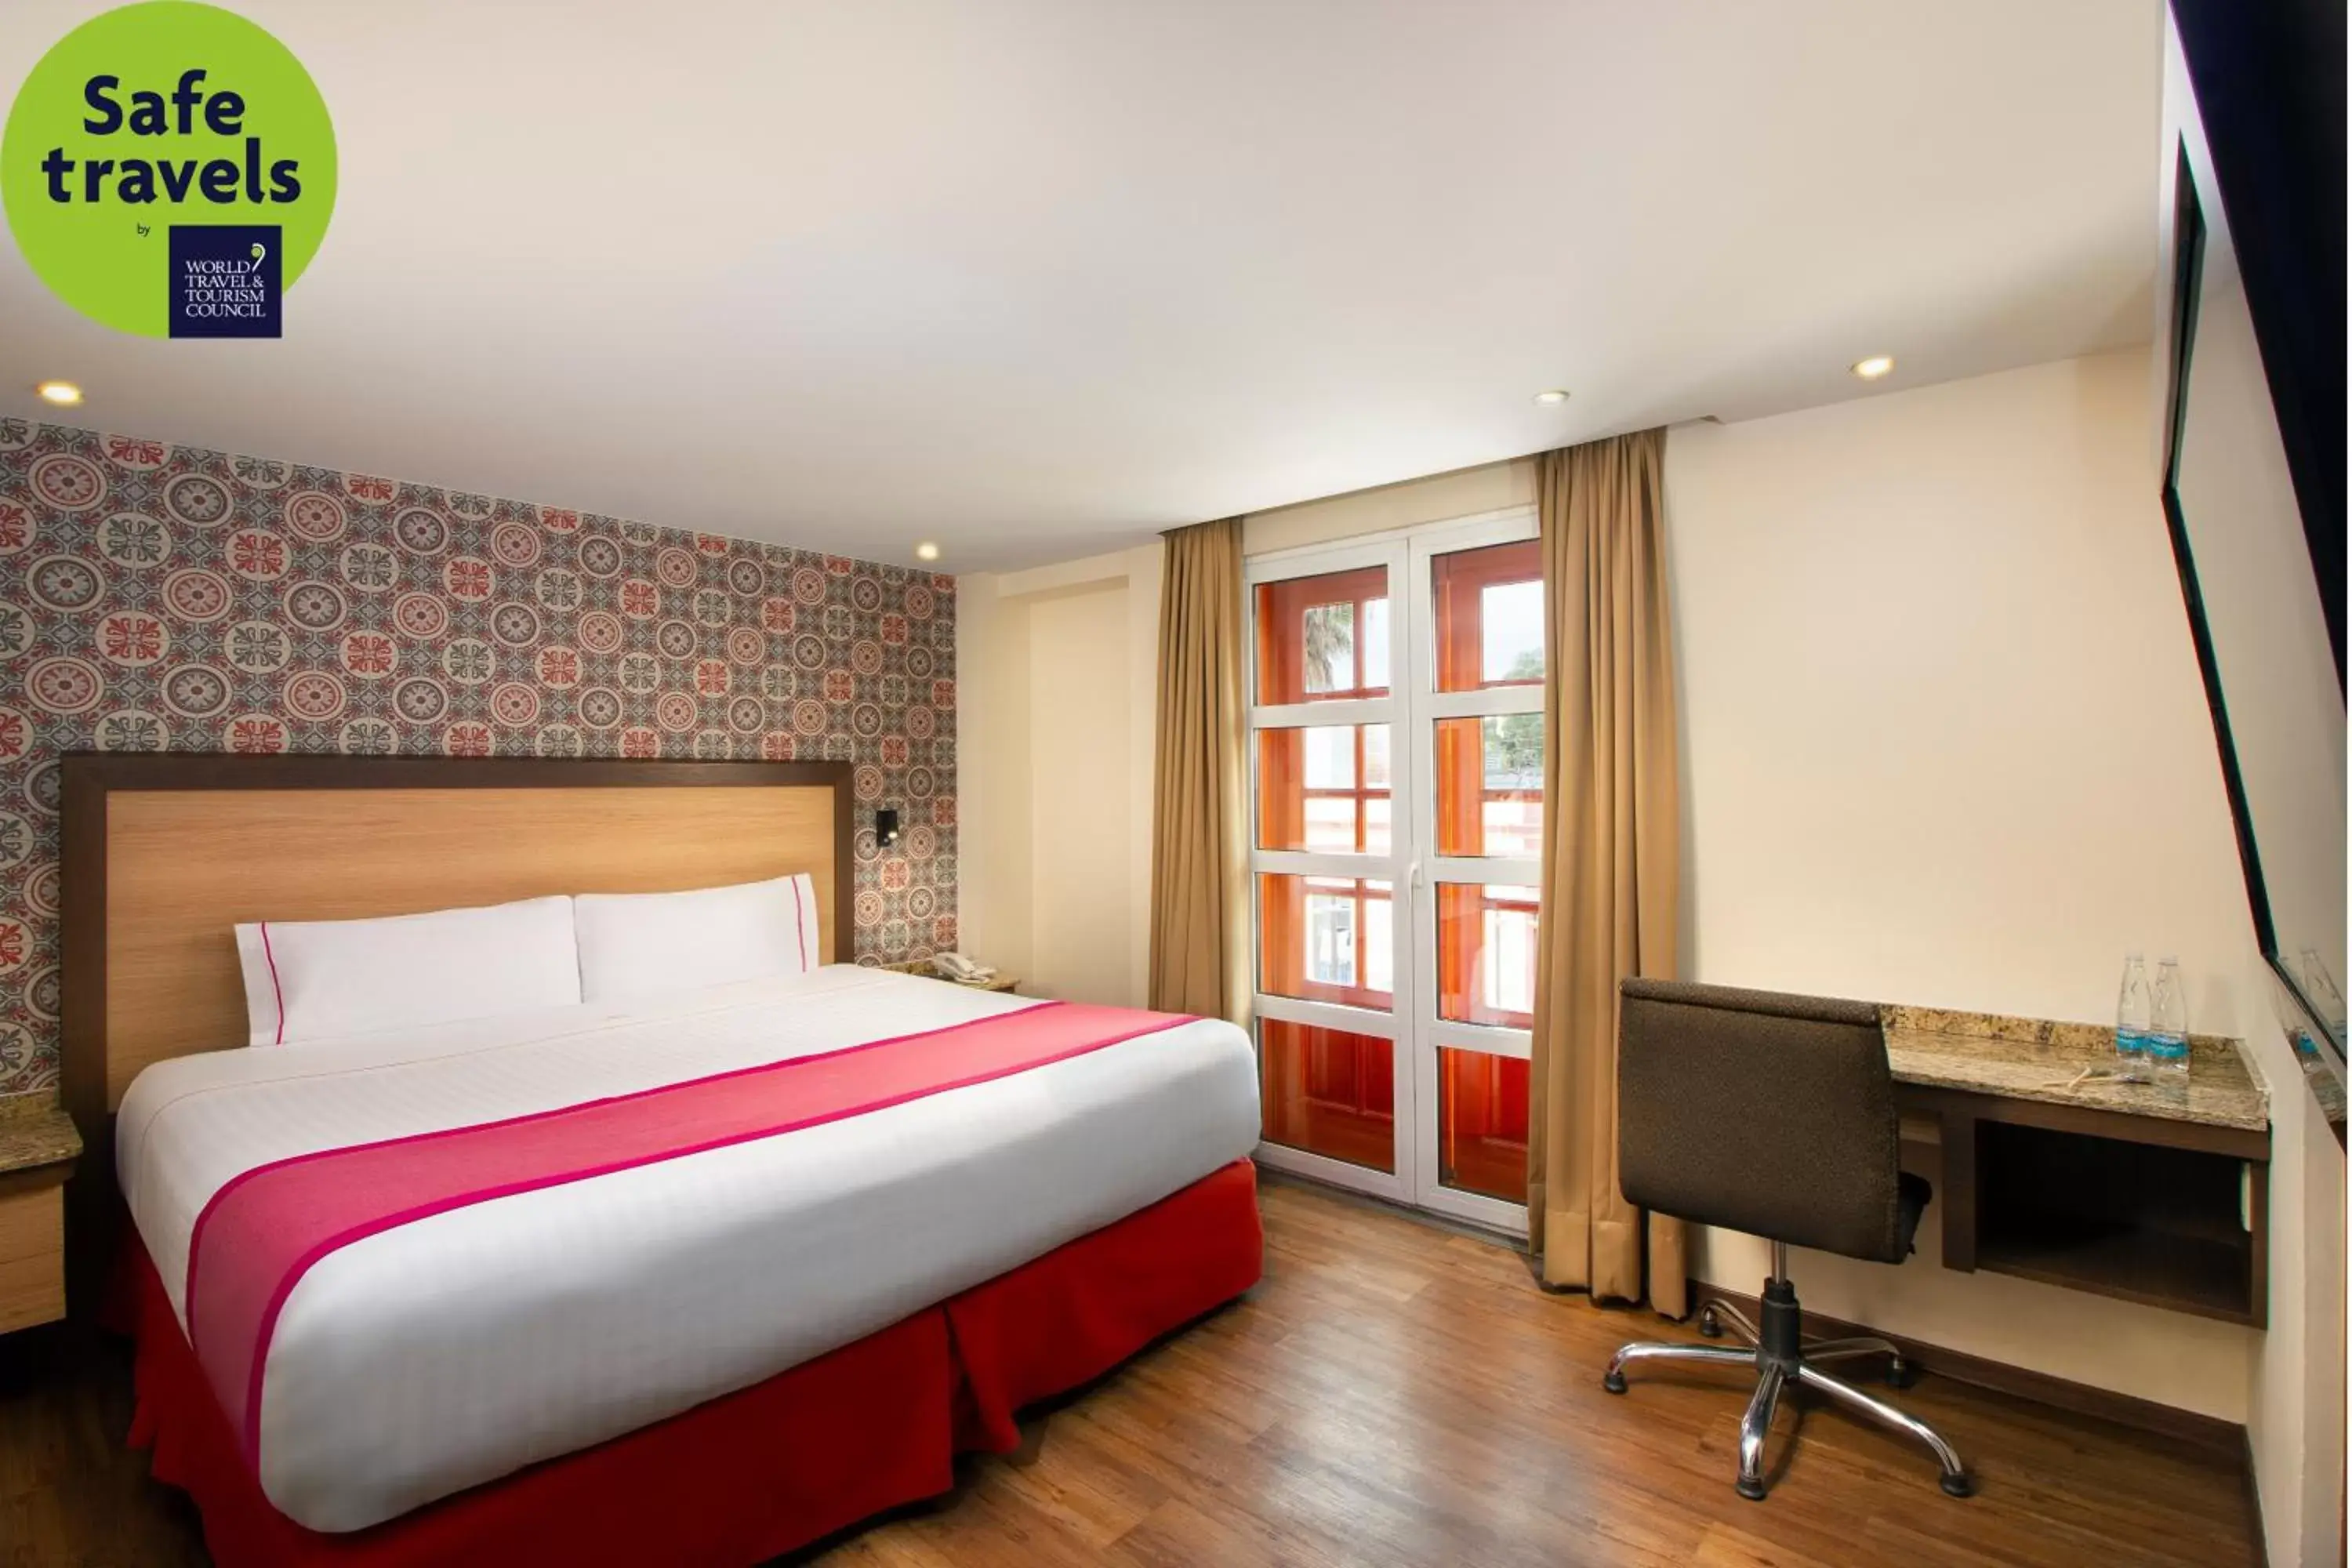 Bed, Room Photo in Hotel MX garibaldi